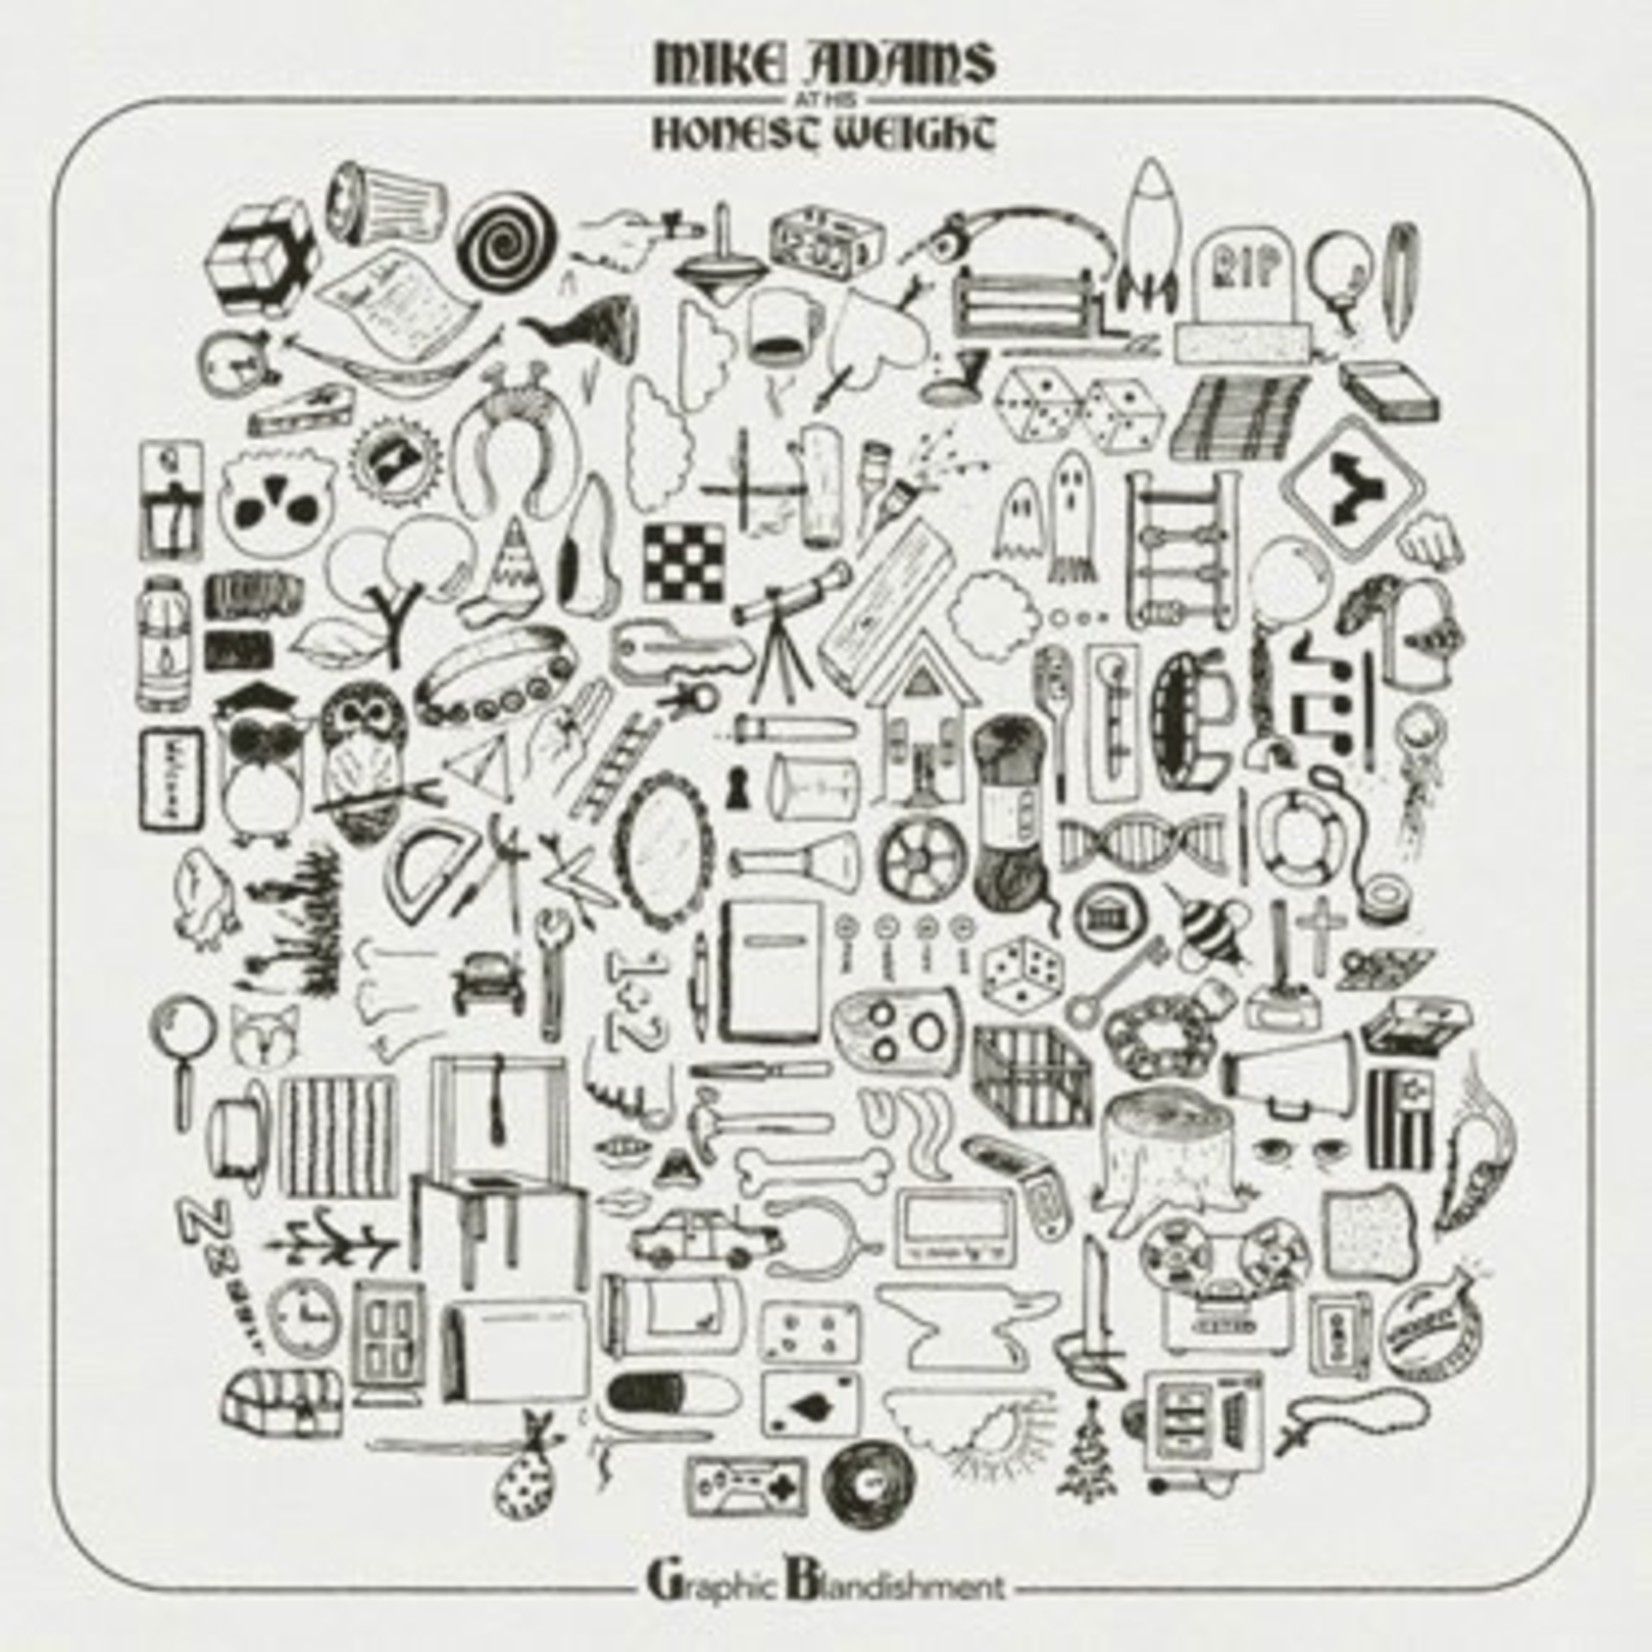 Joyful Noise Recordings Mike Adams At His Honest Weight - Graphic Blandishment (LP)